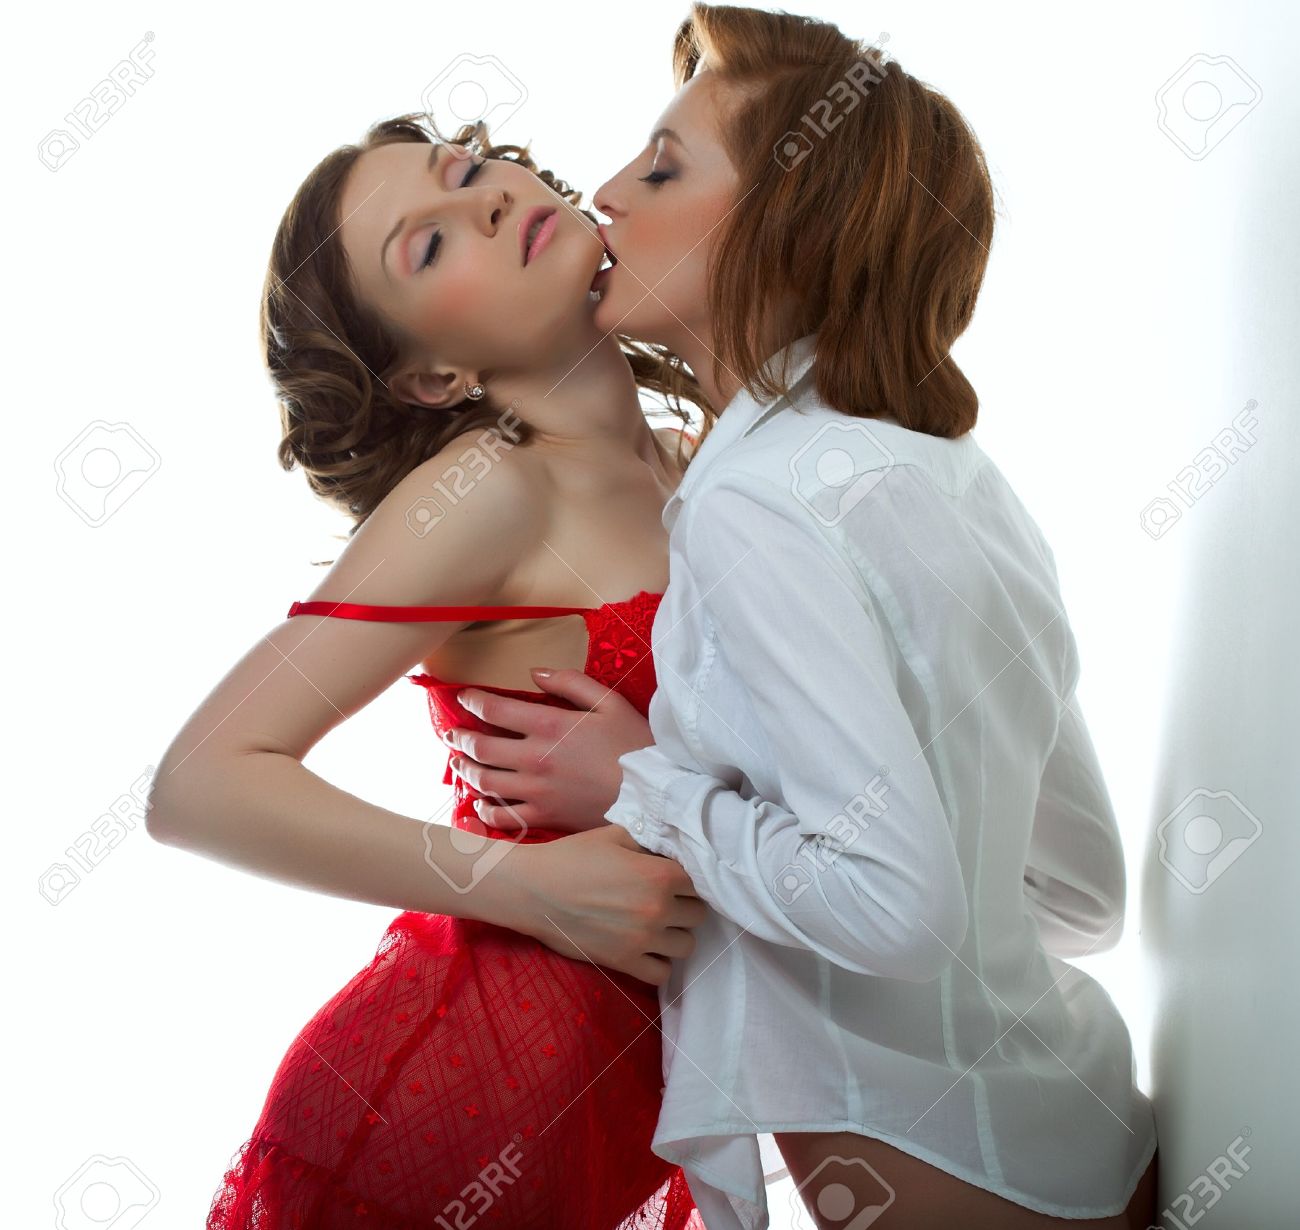 david farr add really hot girls kissing photo